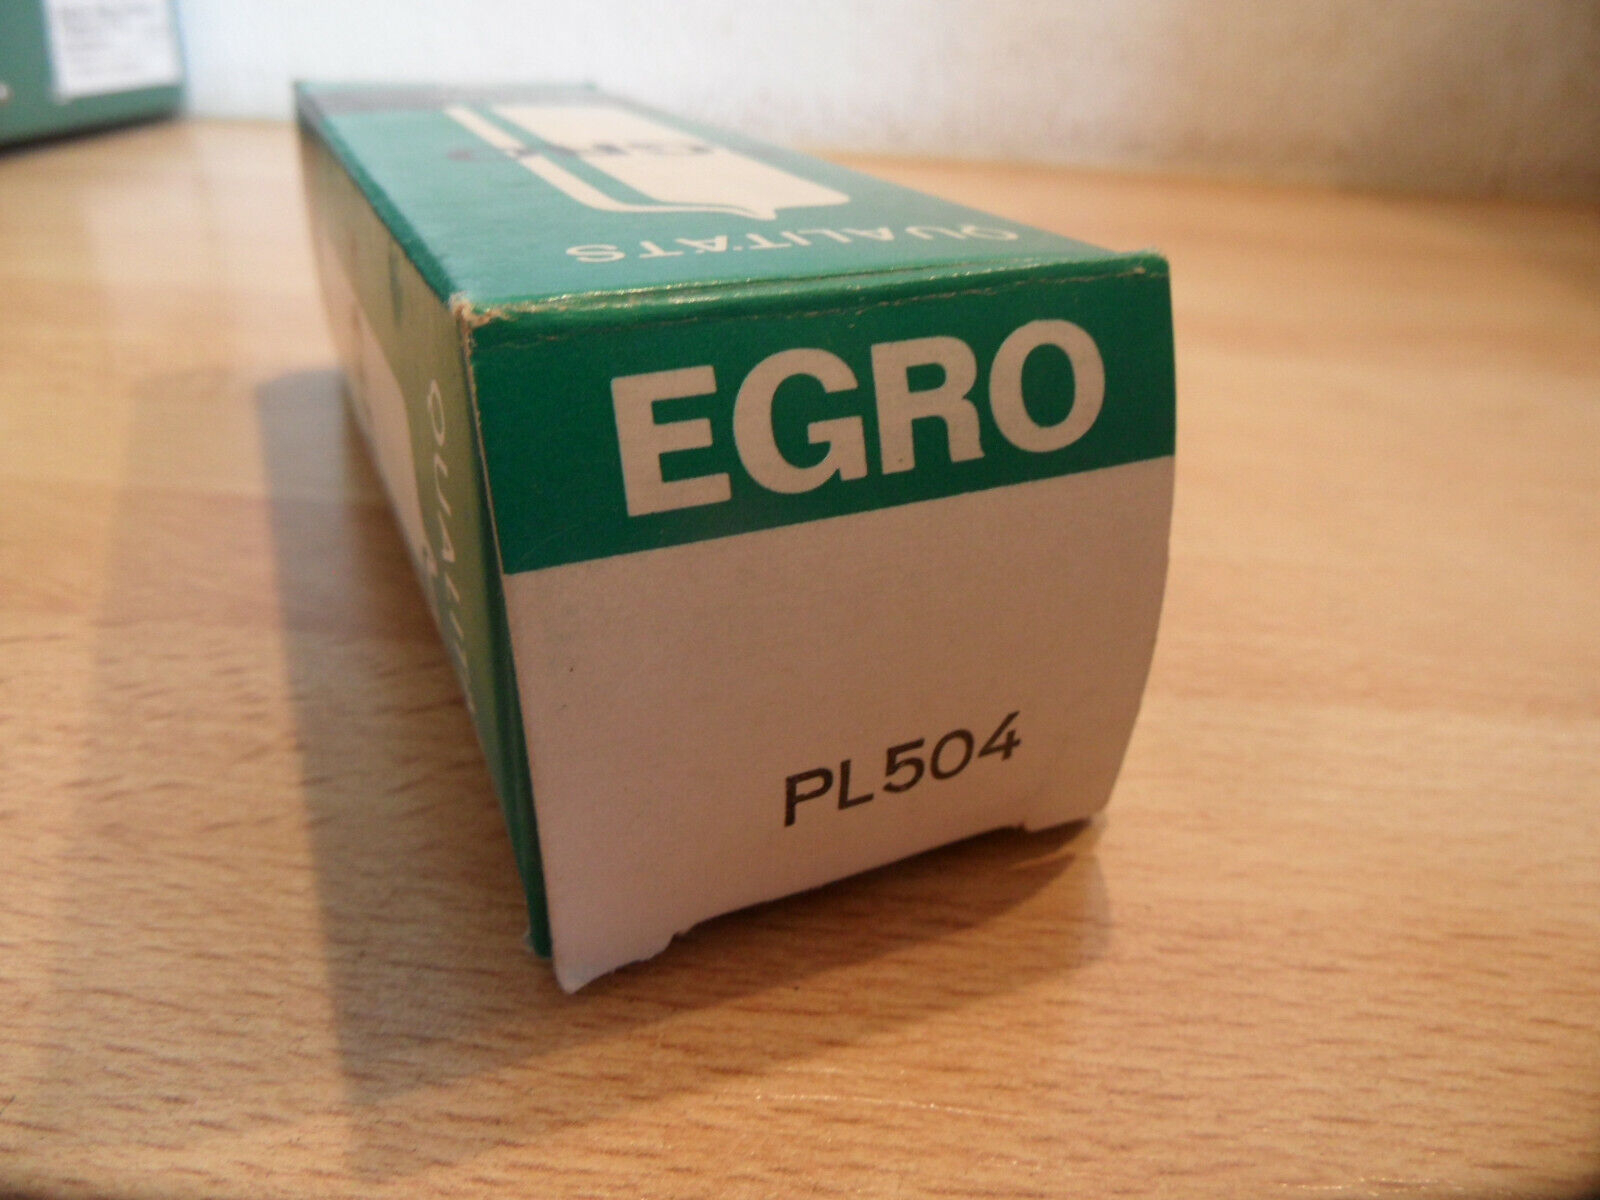 Röhre EGRO PL504 PL 504 für Fernsehröhre 